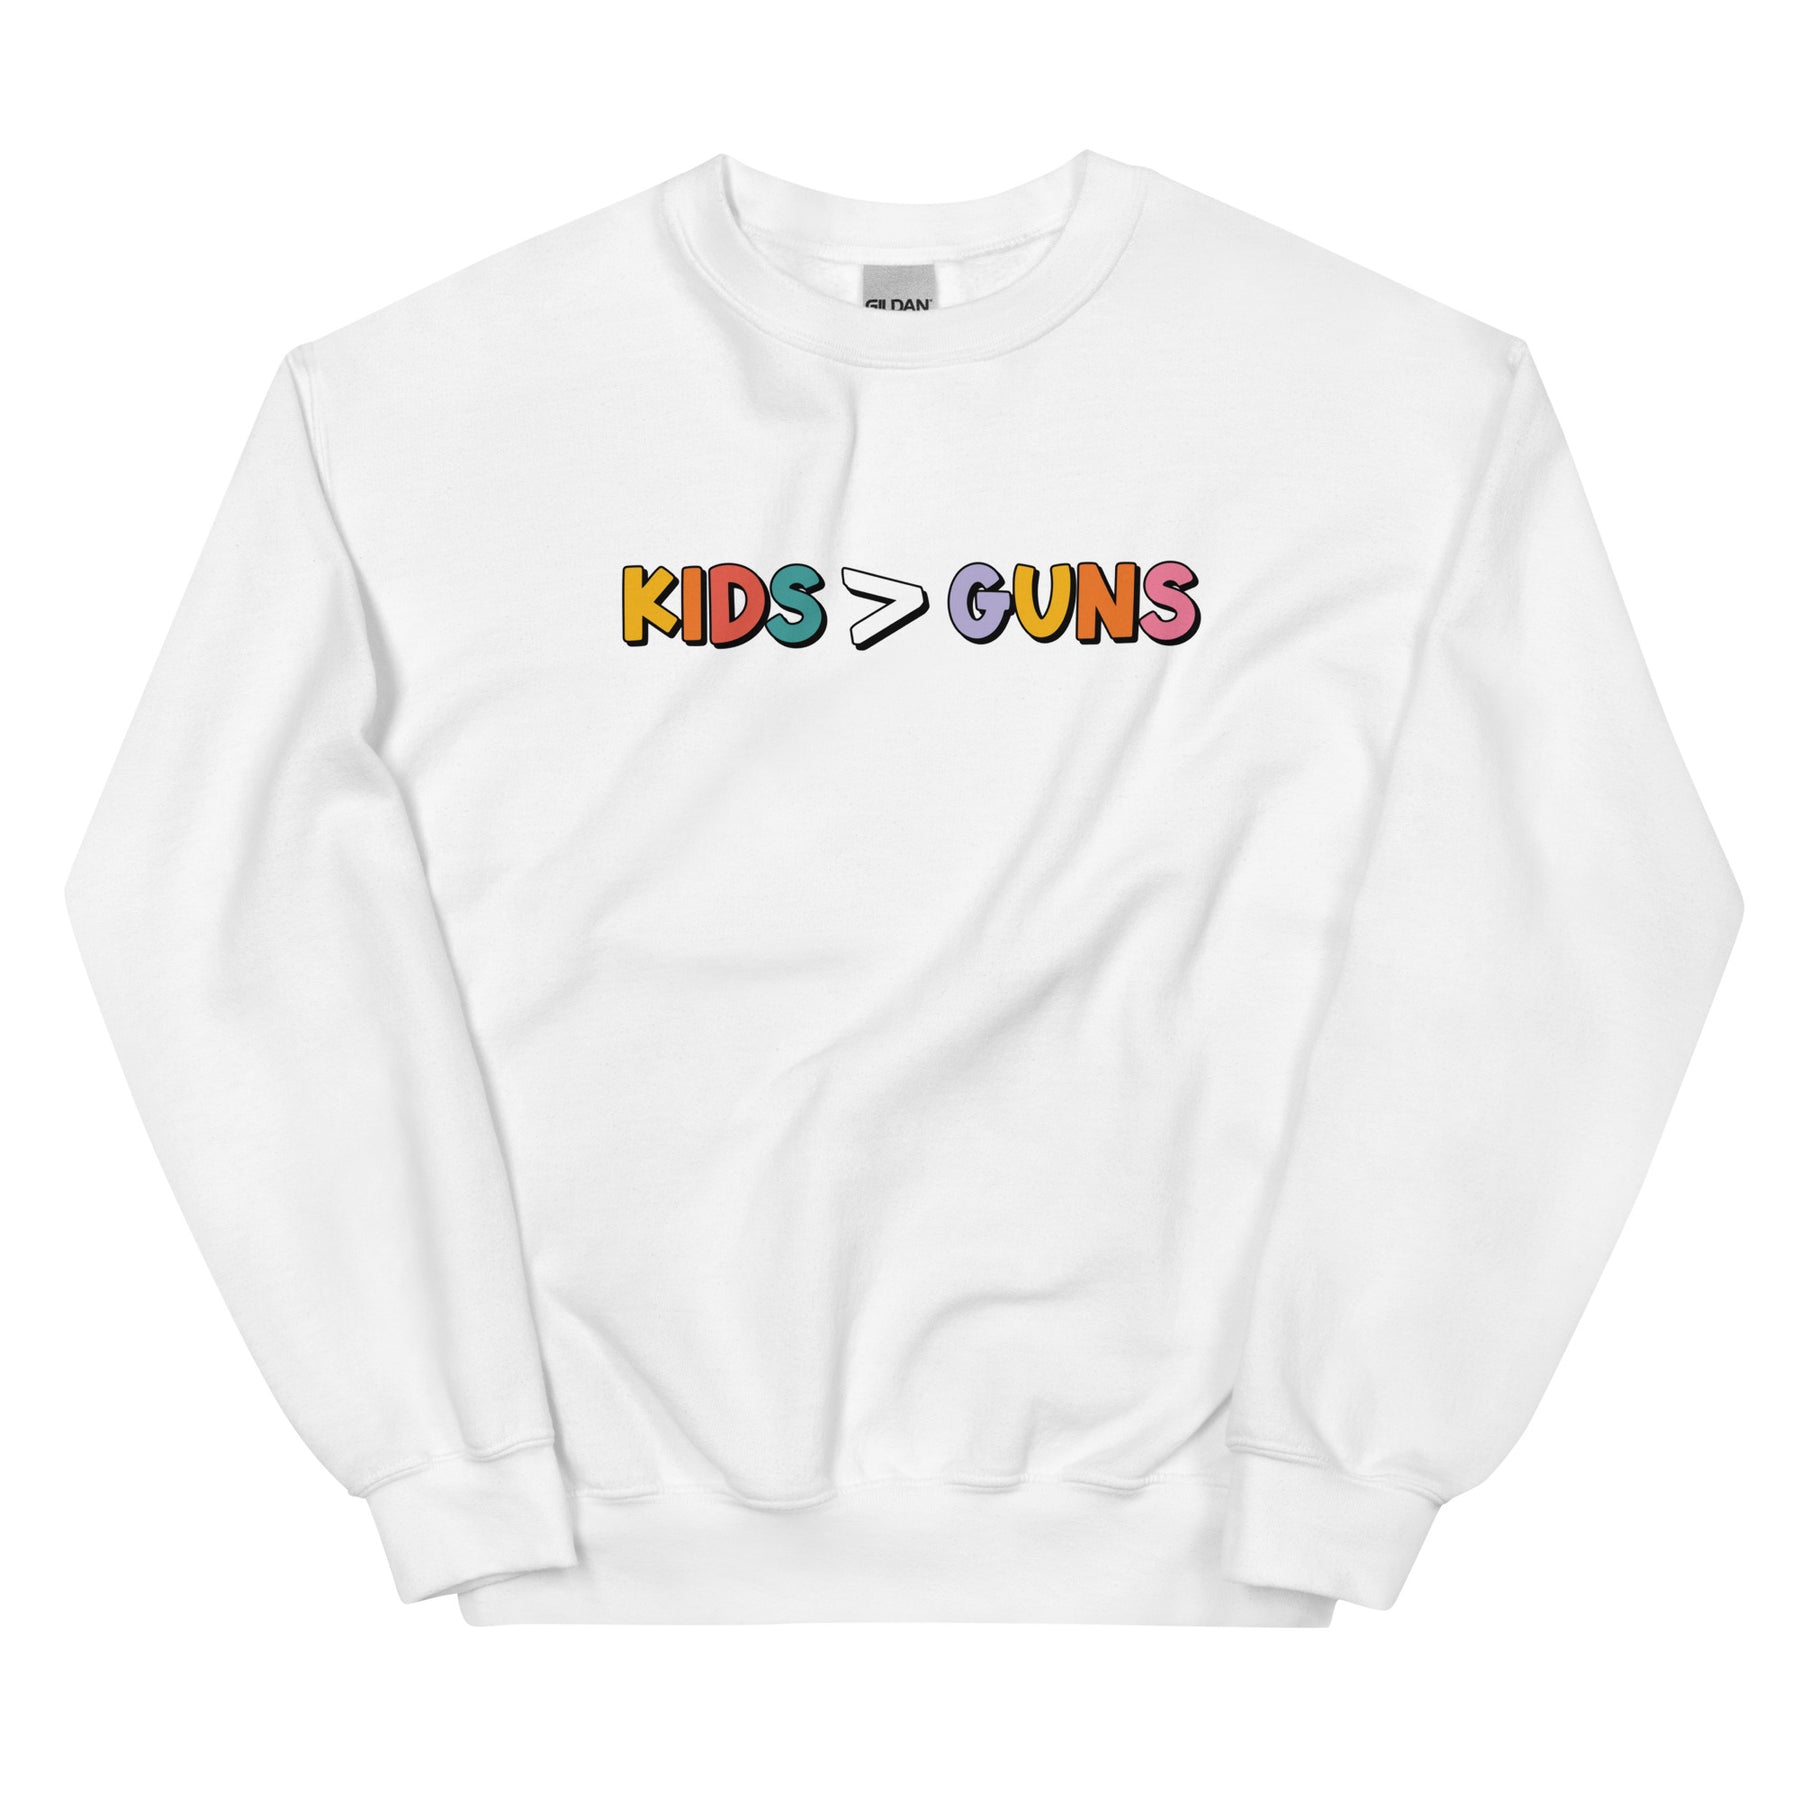 Kids > Guns Sweatshirt